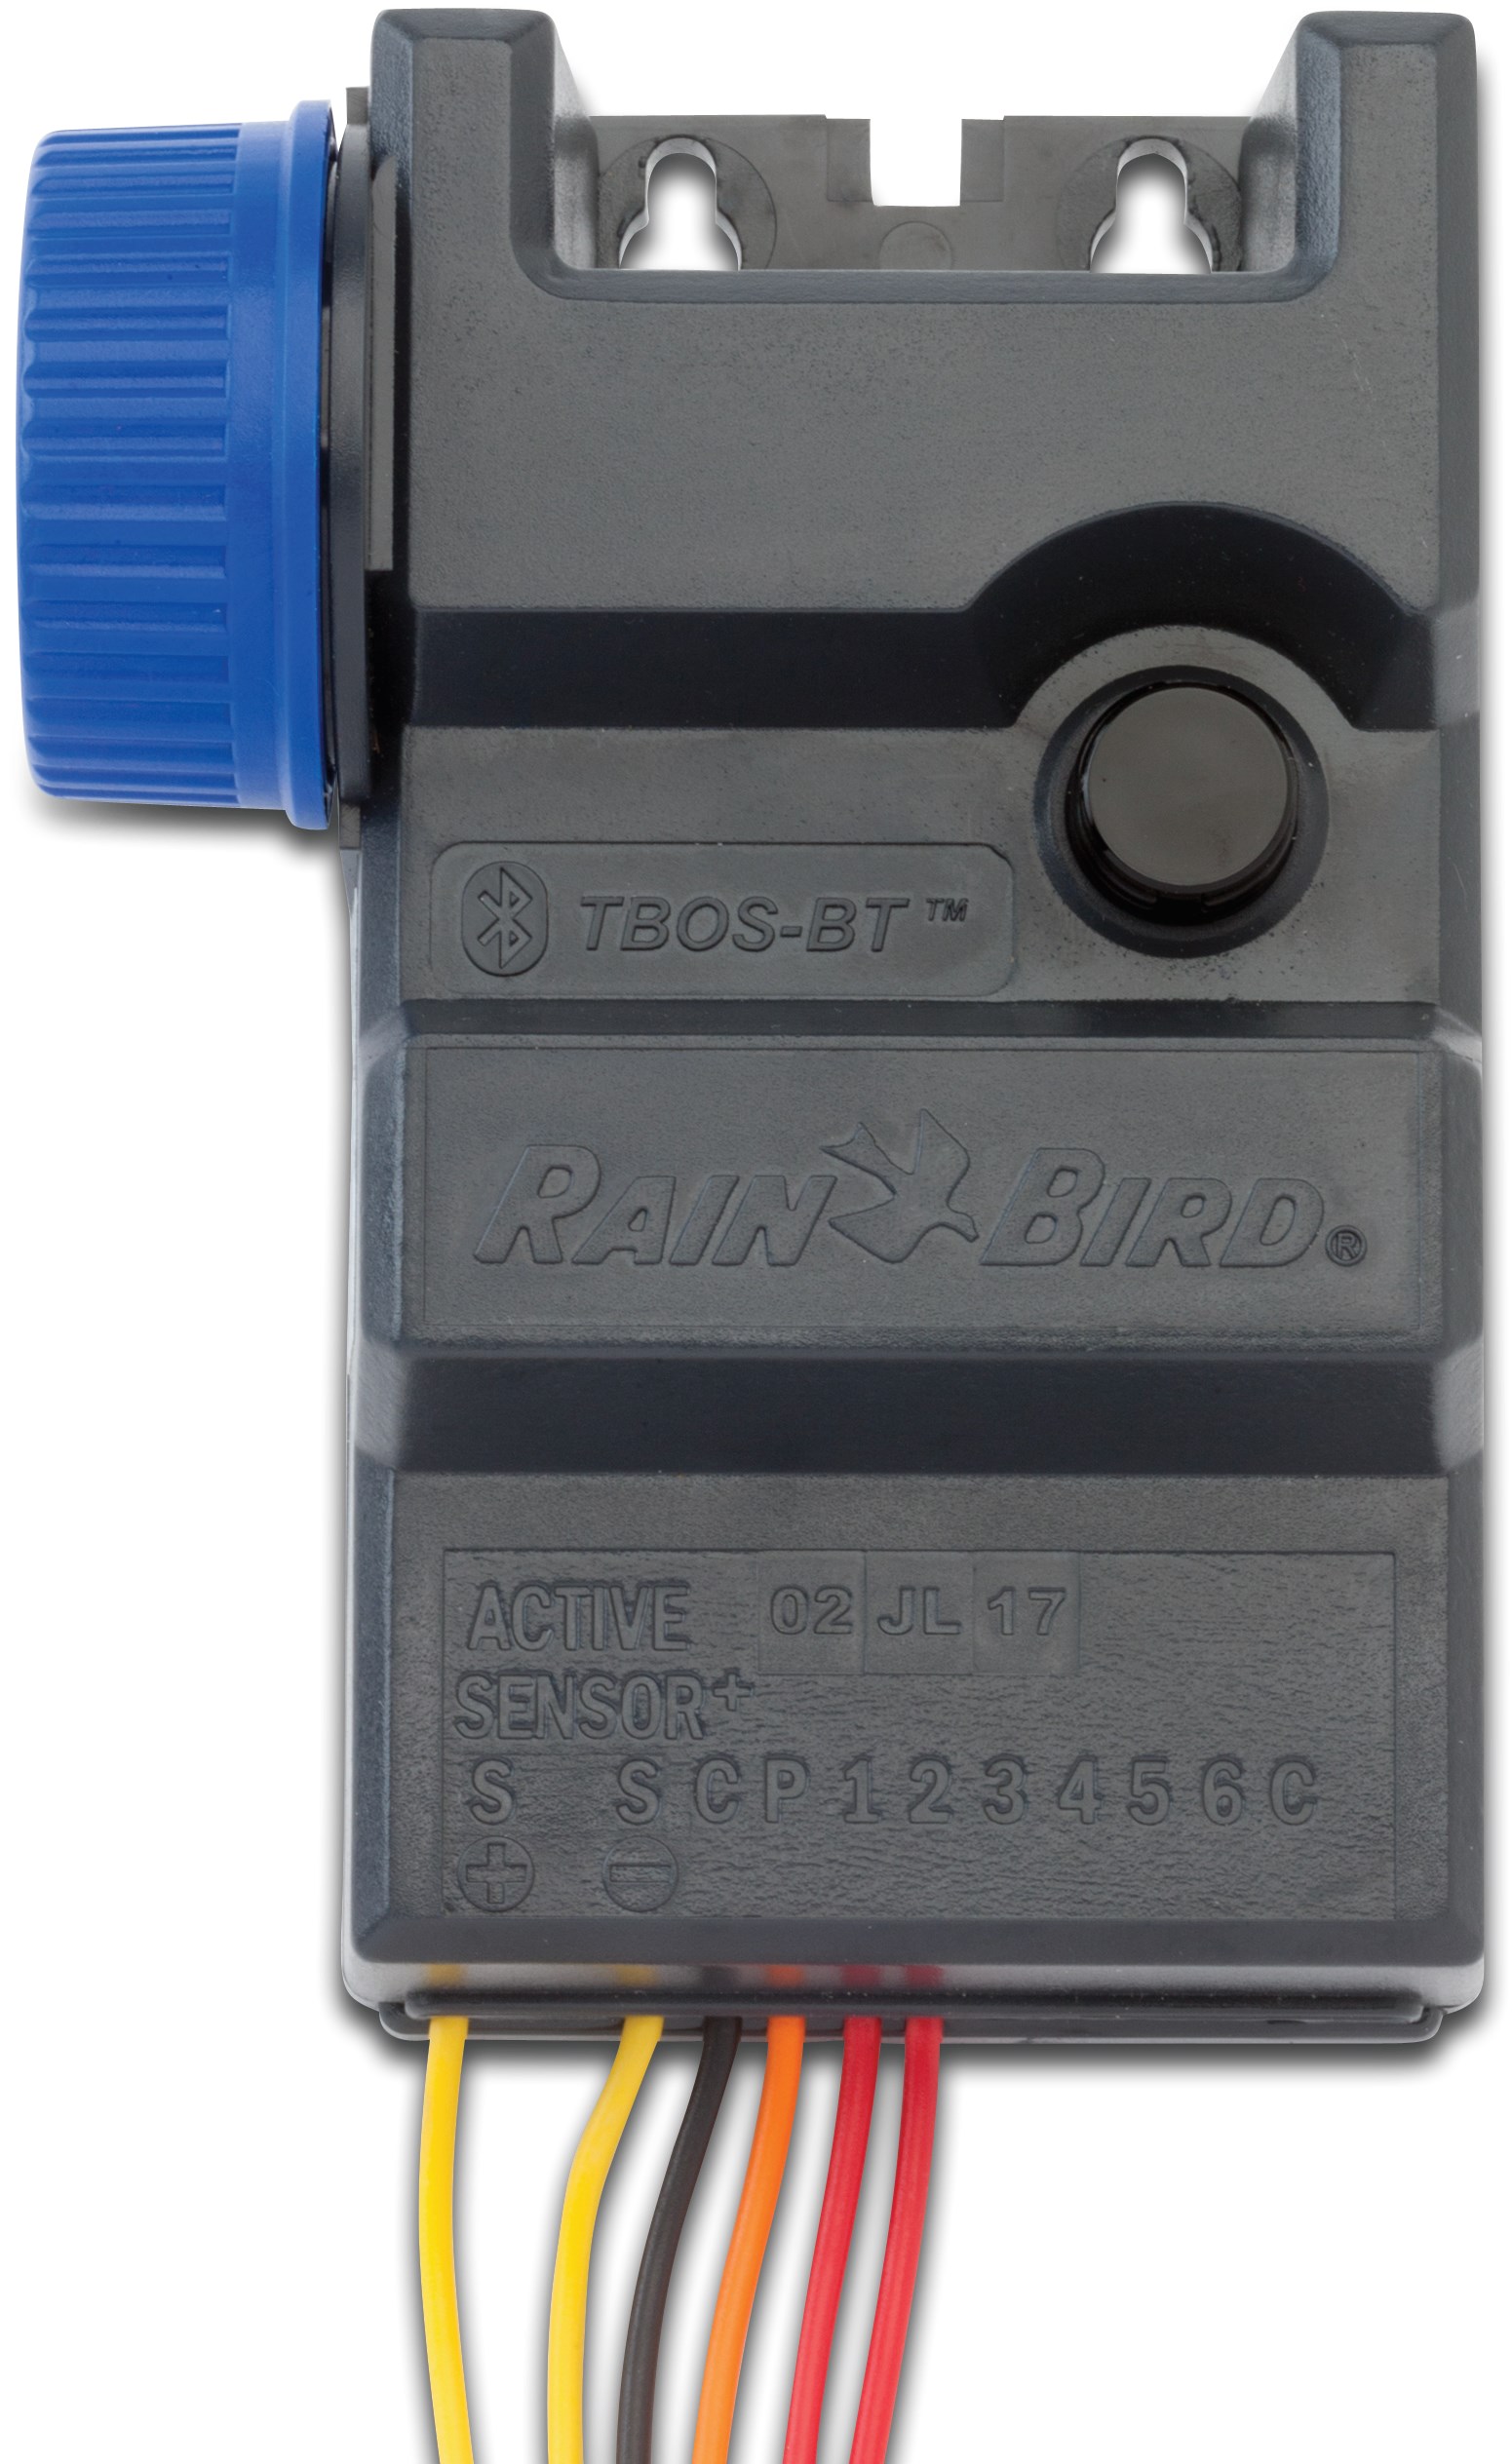 Rain Bird Bluetooth besturingsmodule 9V type TBOSBT1 1 stations